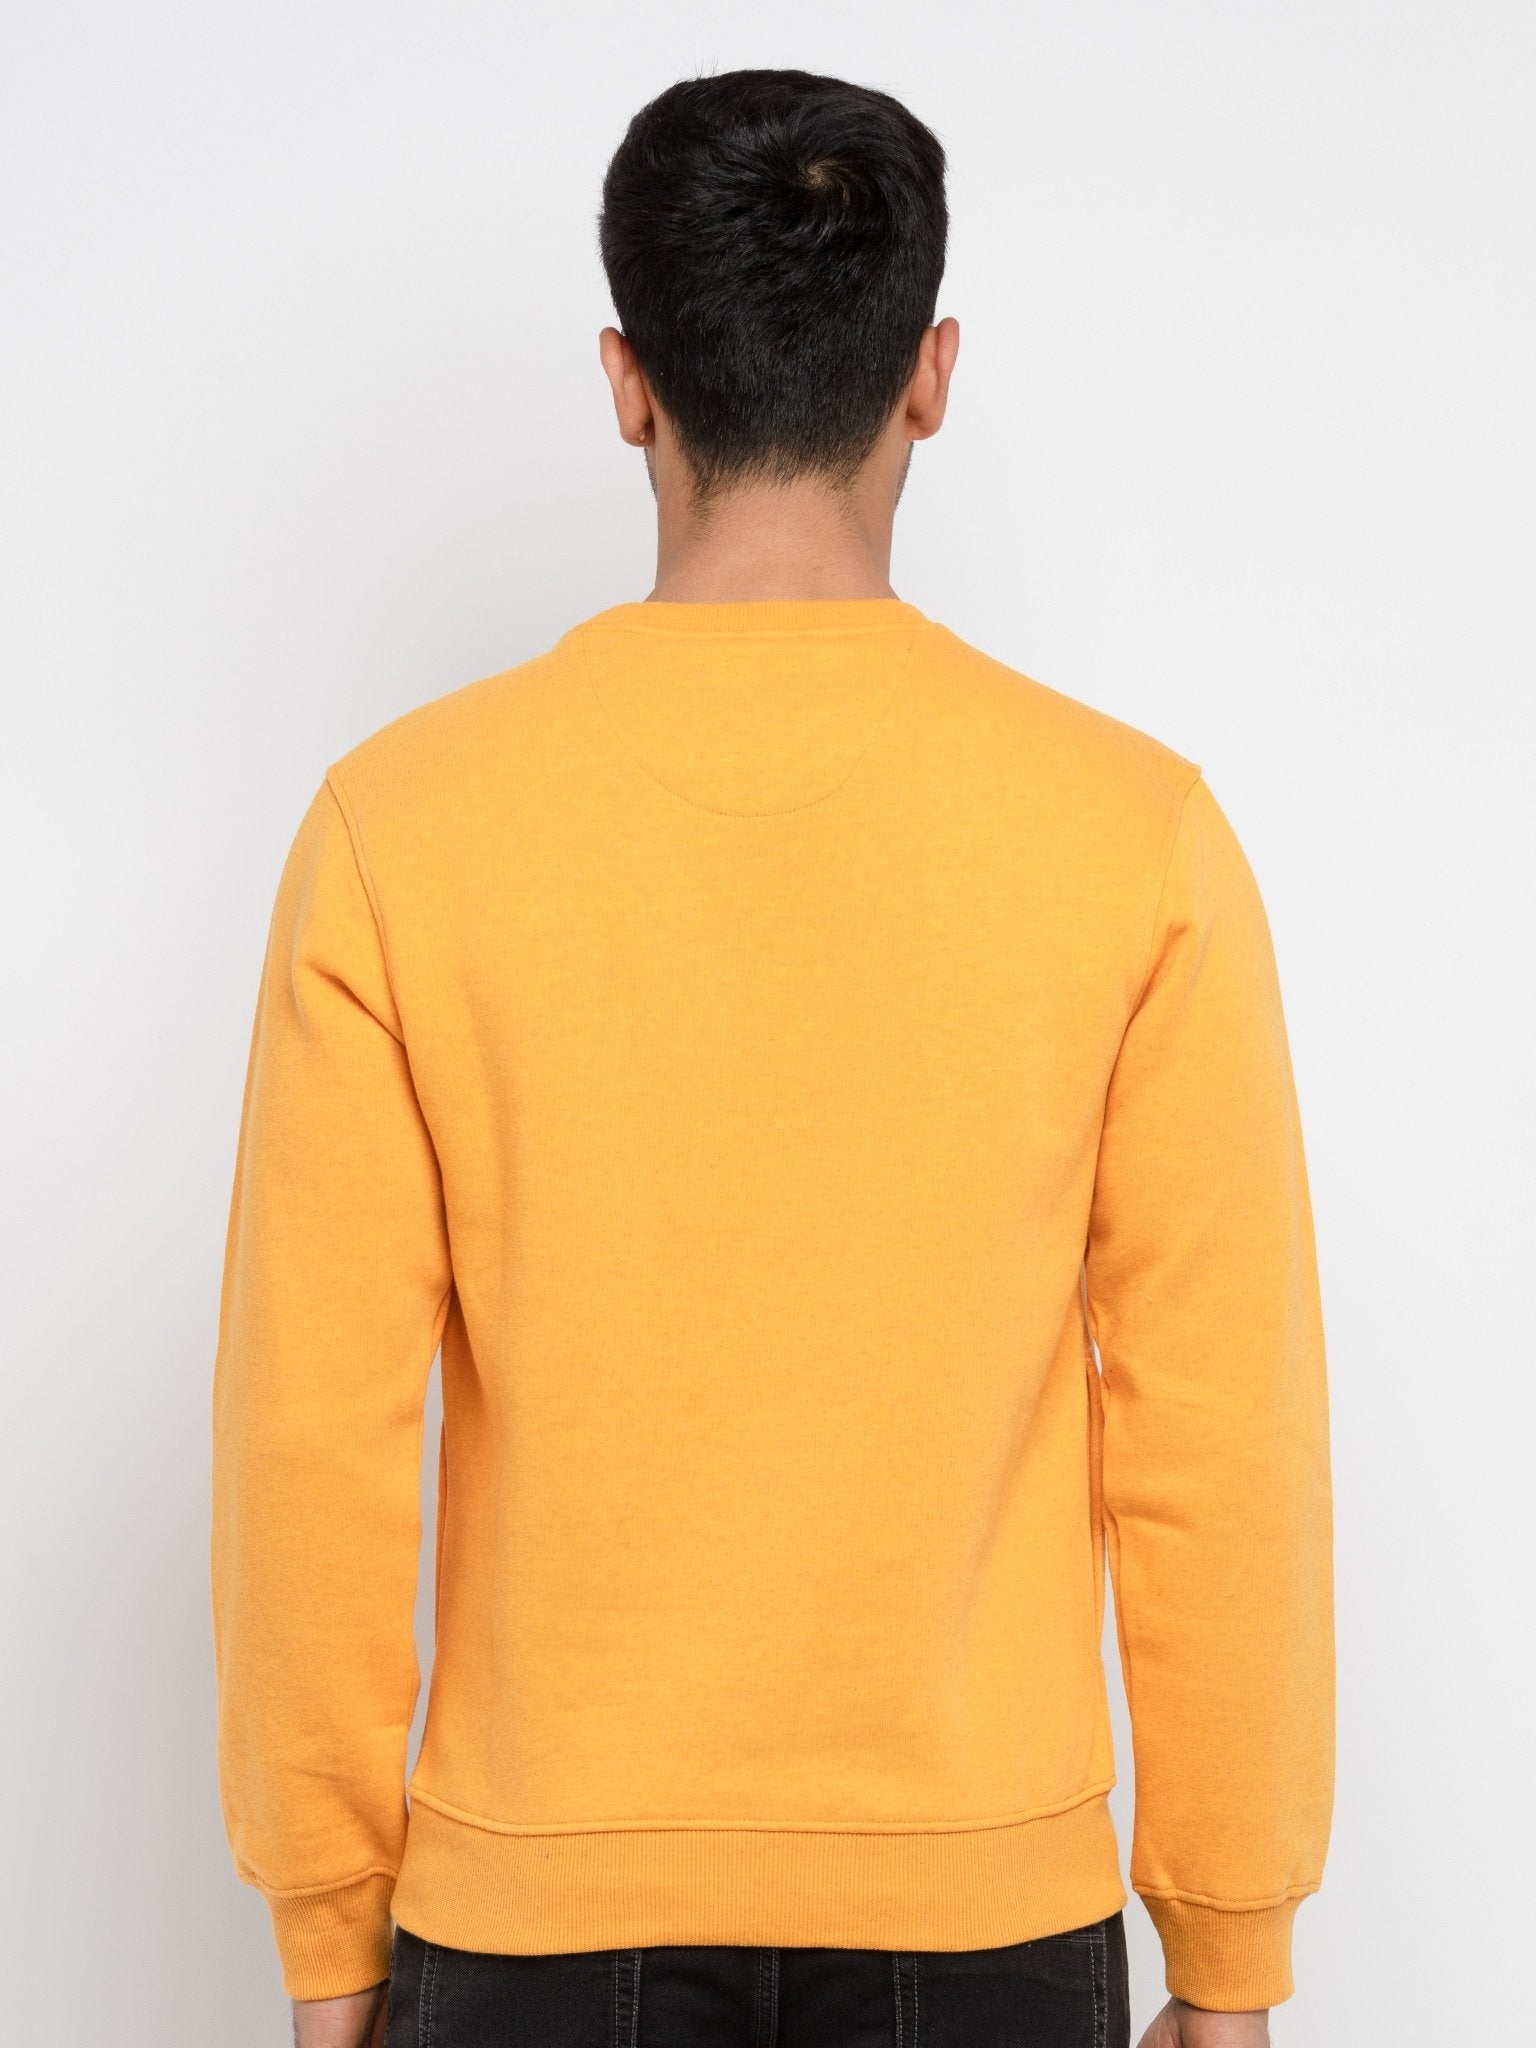 Status Quo | Men's Yellow Polycotton Printed Sweatshirts 2